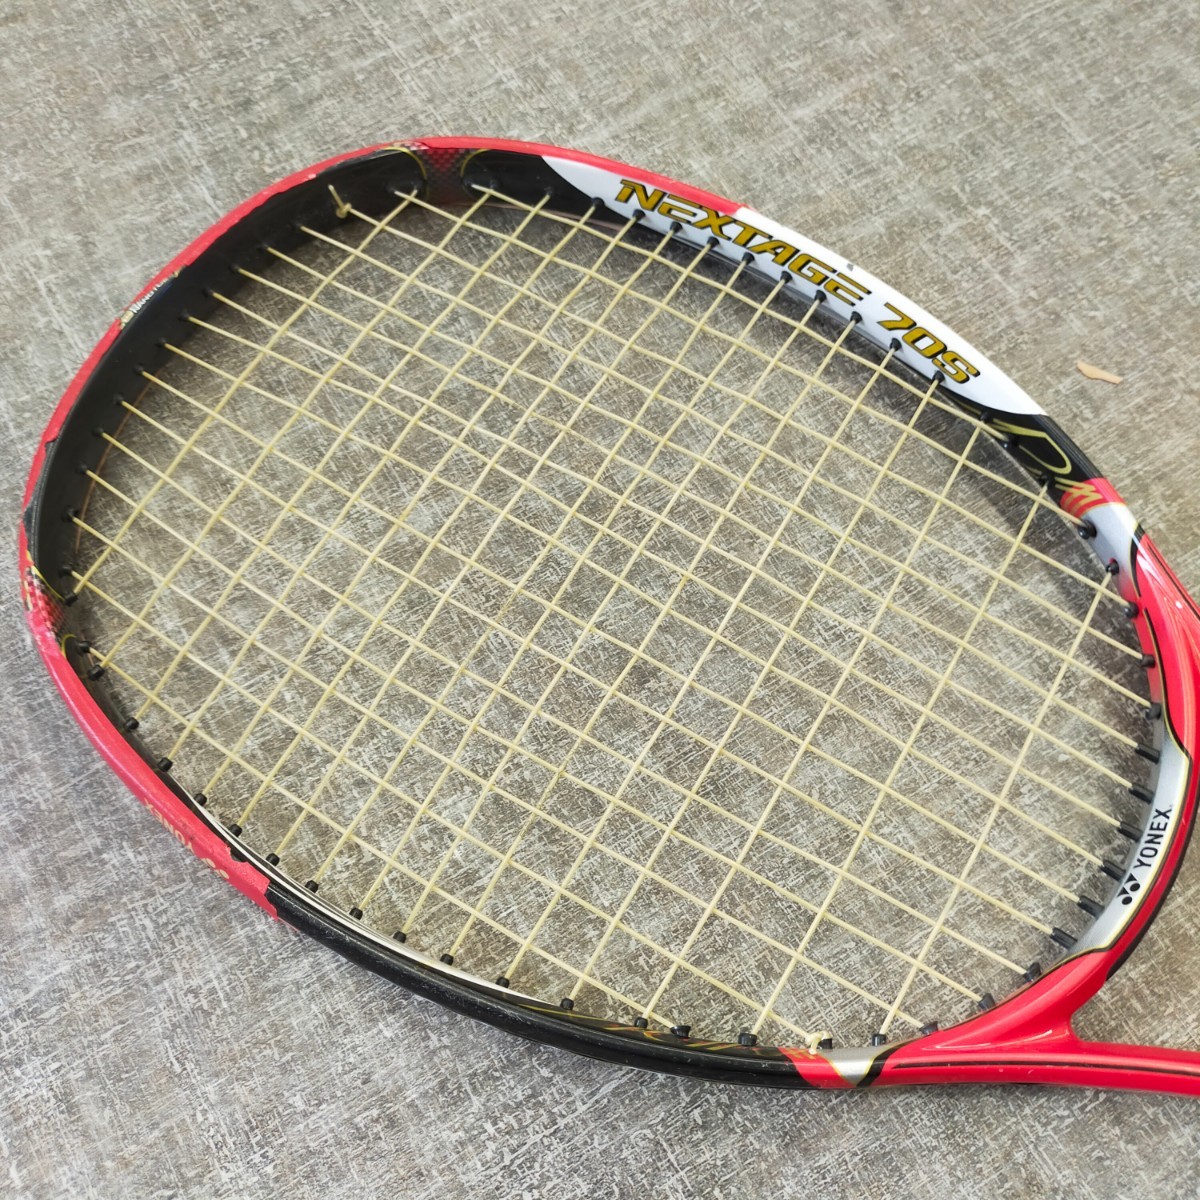 su888 softball type tennis racket YONEX Yonex NEXTAGE 70S Nextage UL1